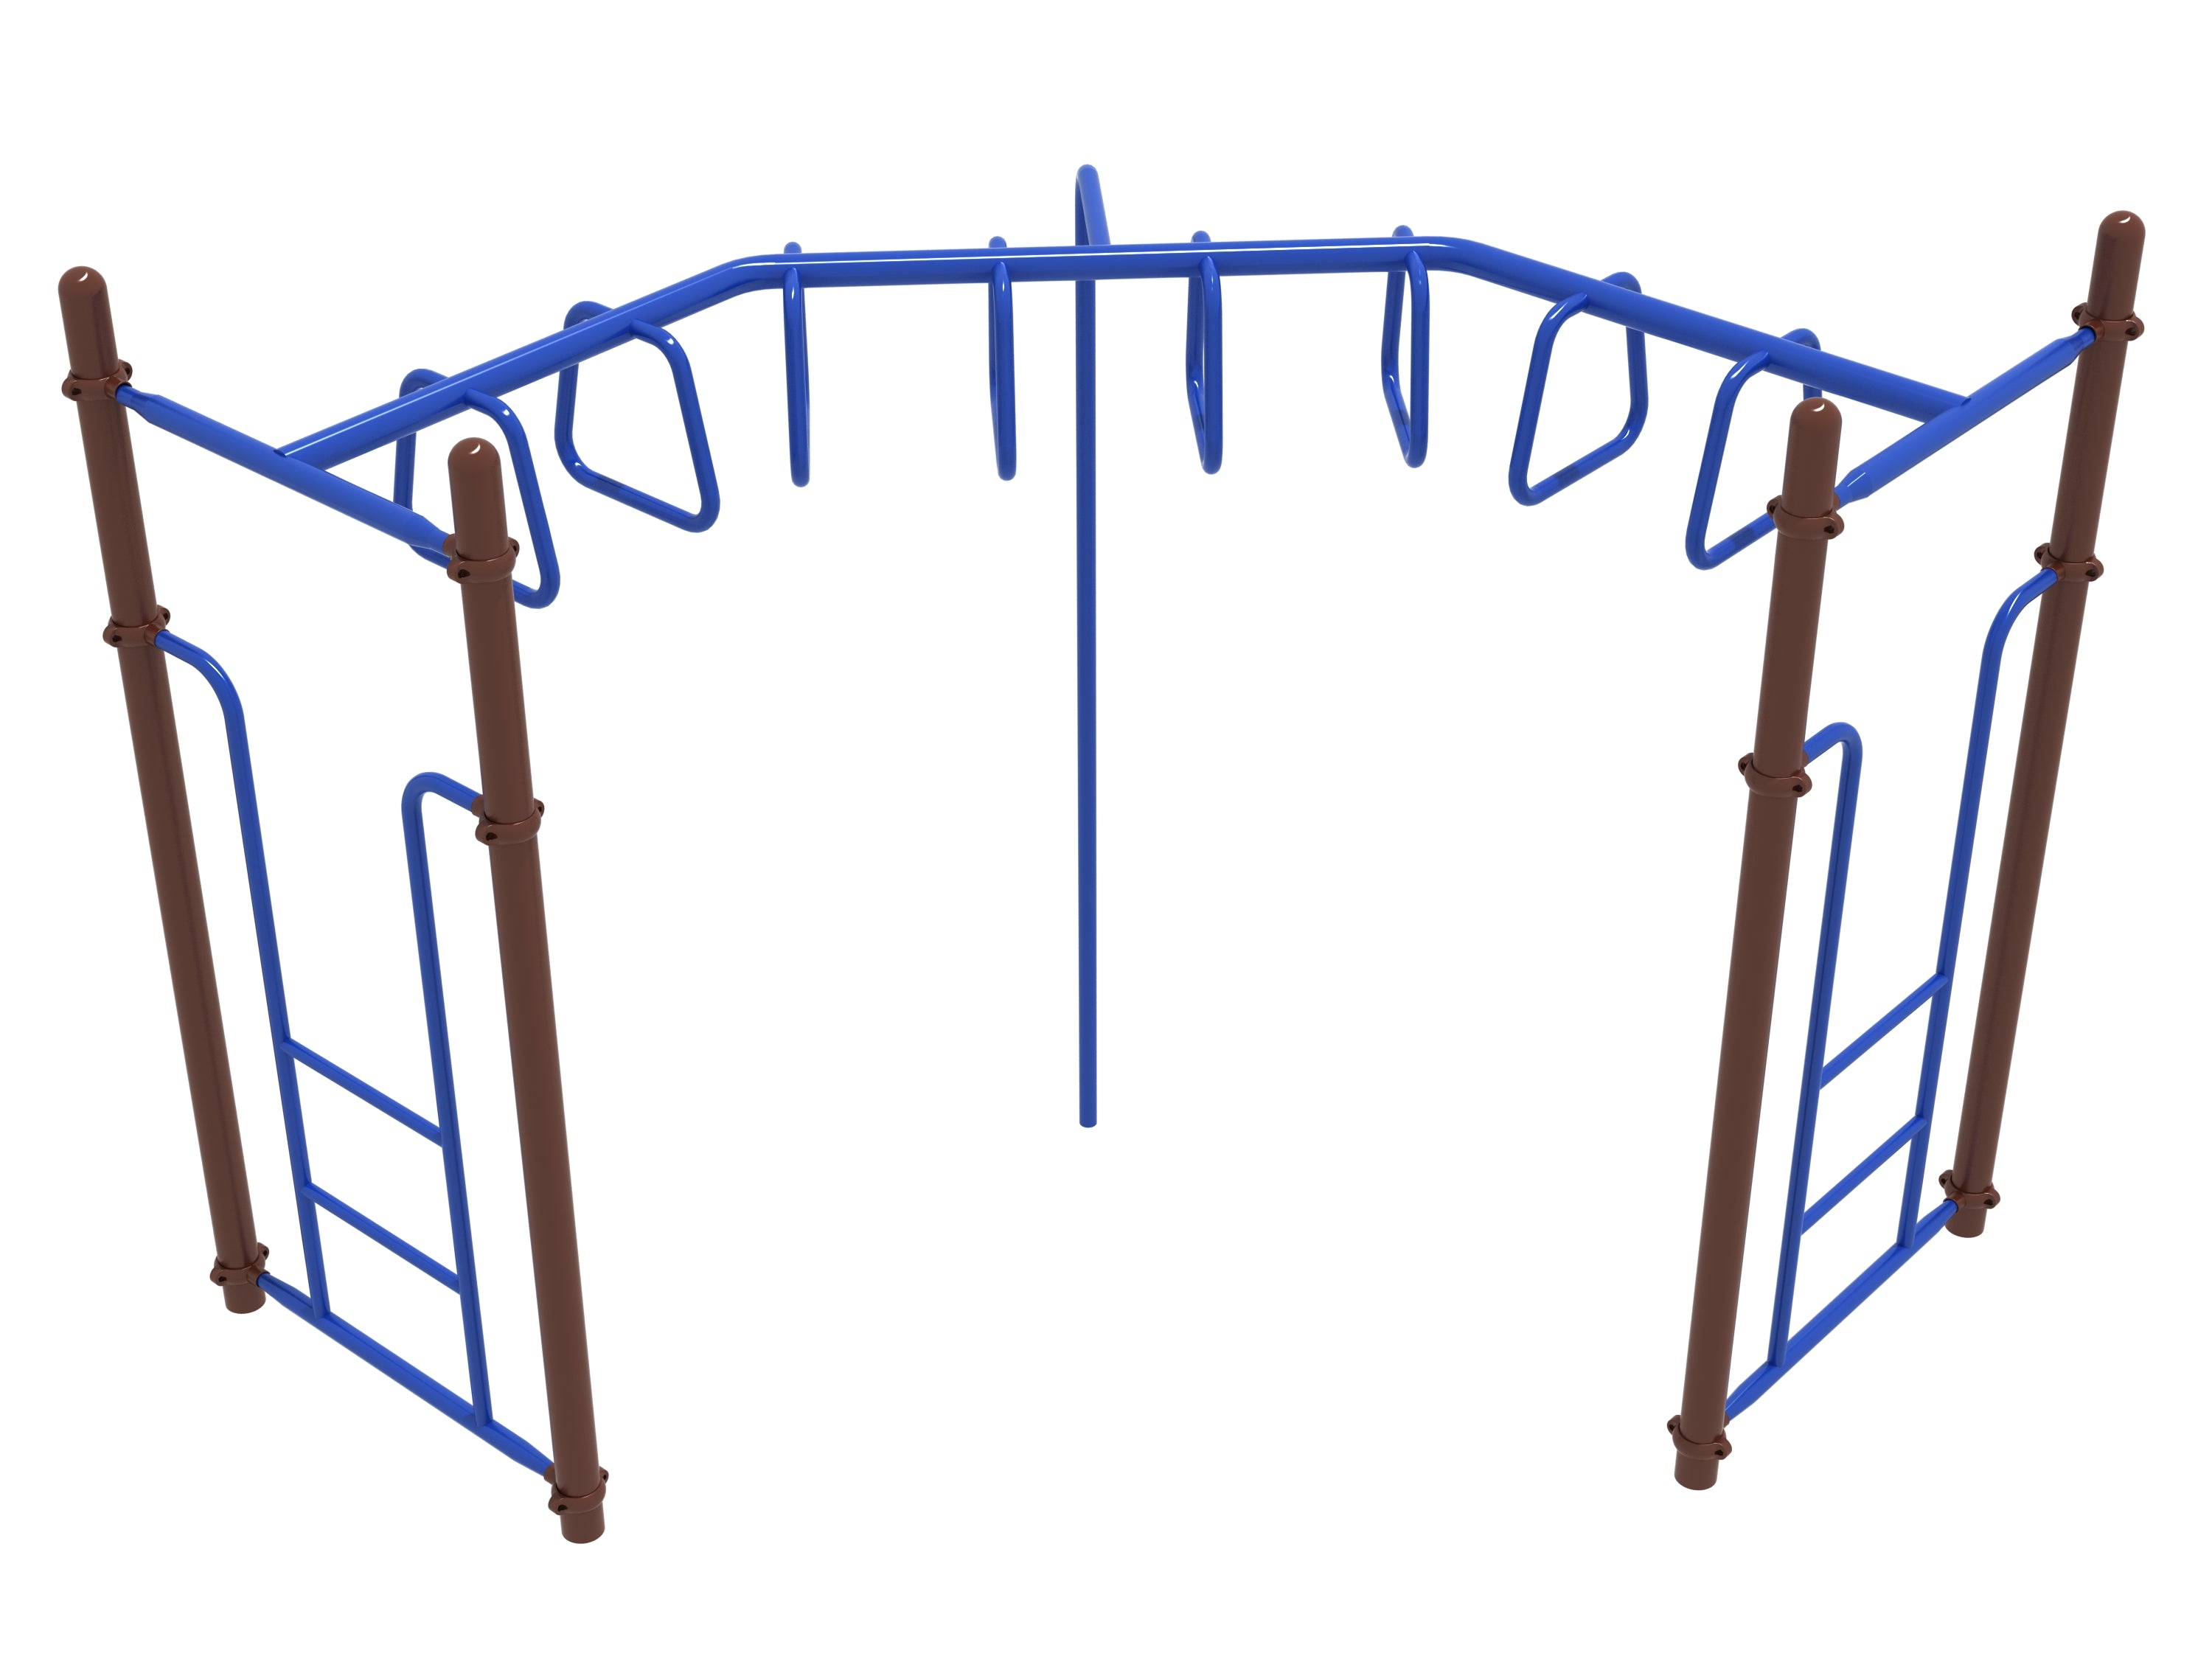 90-Degree Trapezoid Loop Ladder Custom Colors